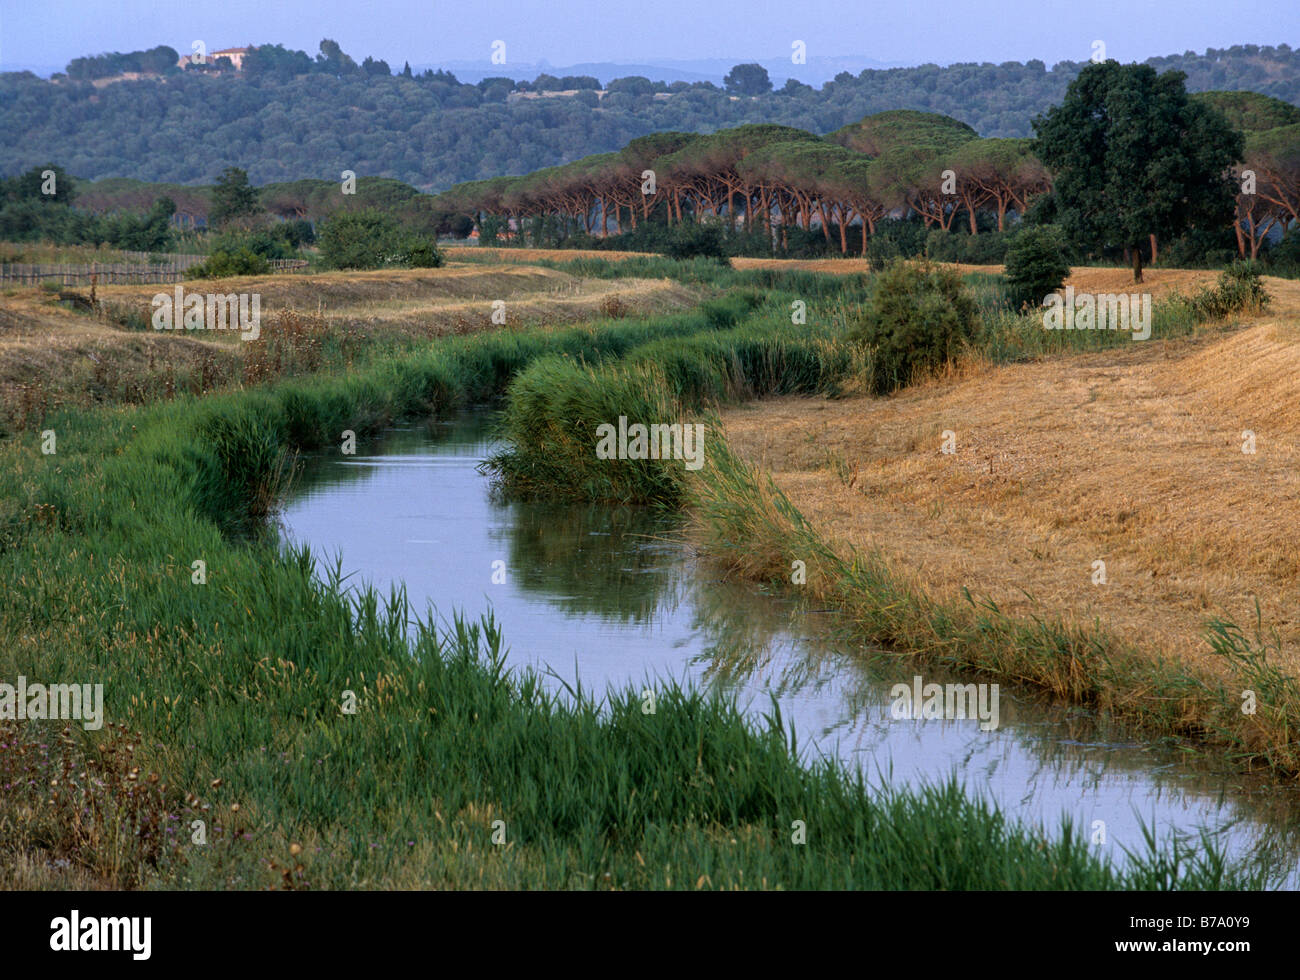 Spergolaia, marshes in the Maremma Nature Park near Alberese, Province of Grosseto, Tuscany, Italy, Europe Stock Photo